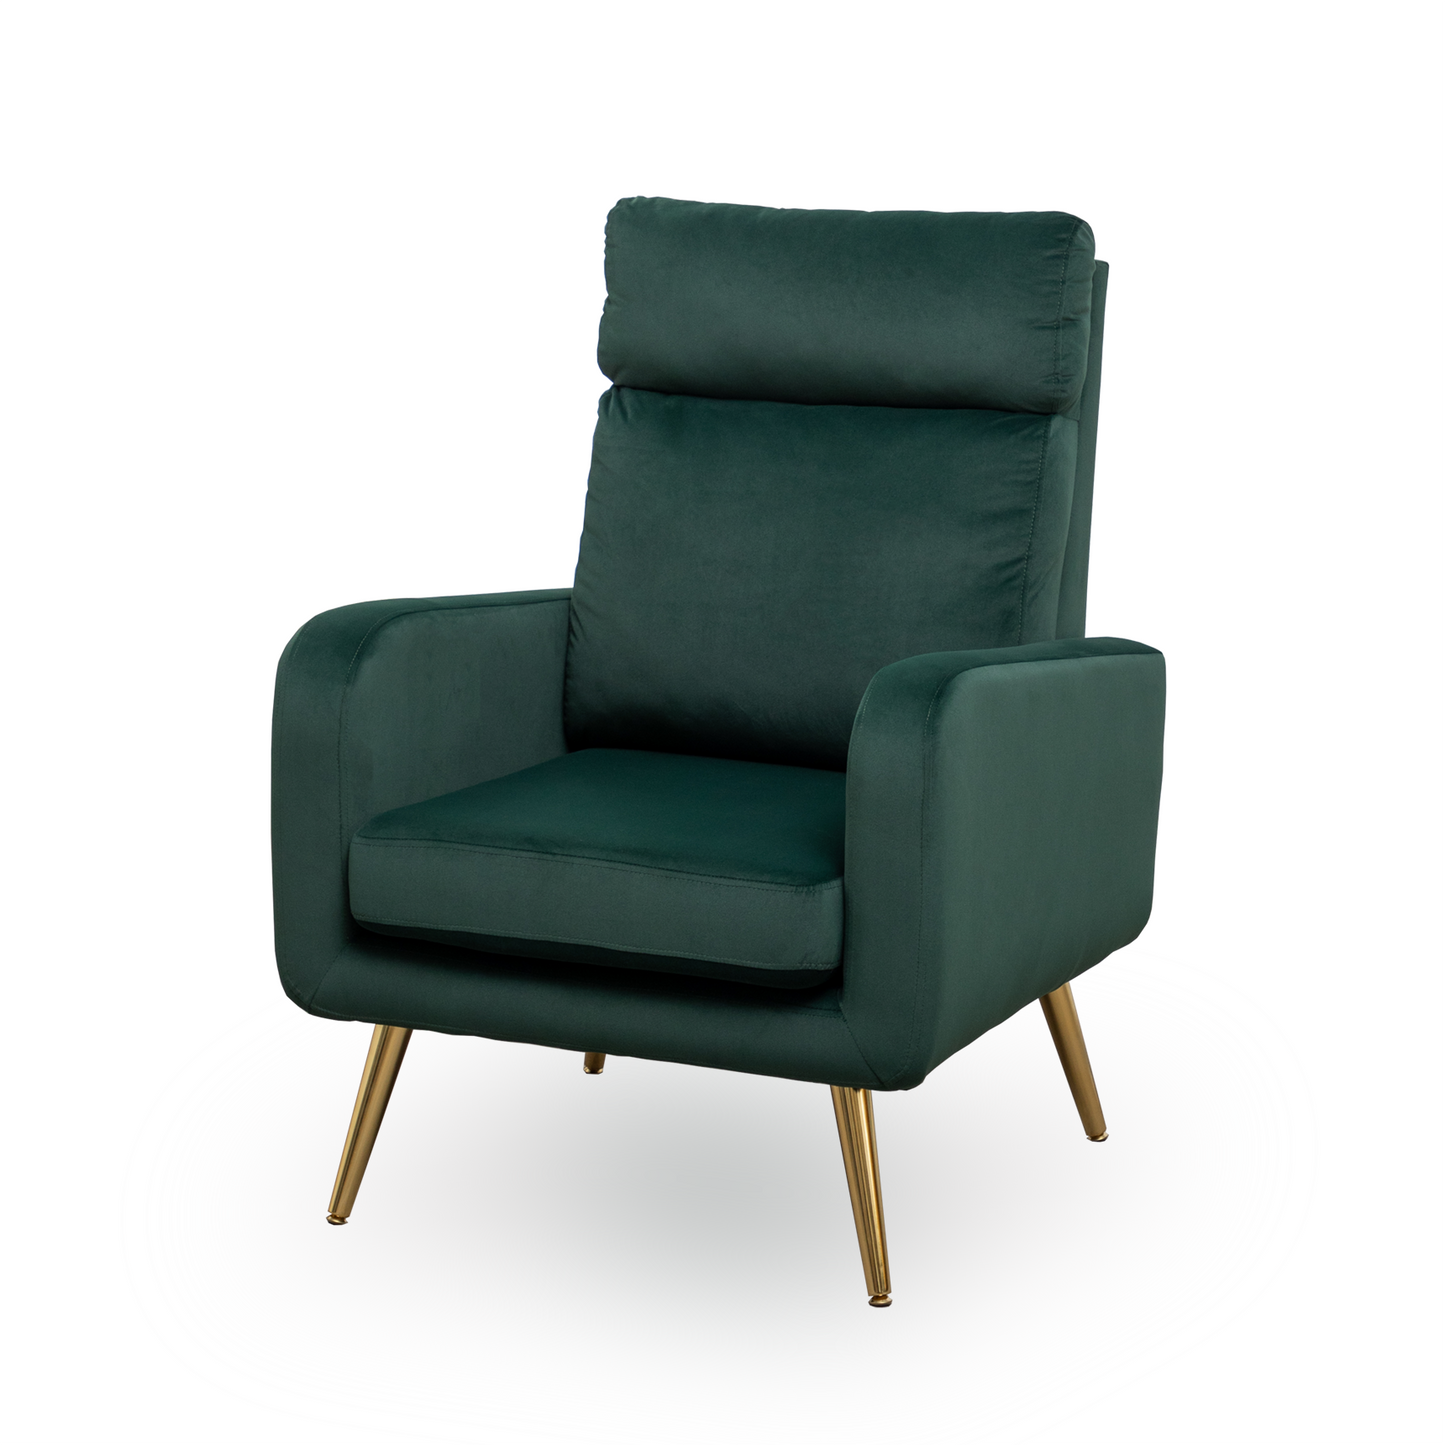 FONDHOME Velvet Accent Chair, Modern Living Room Armchair, Bedroom Dorm Reading Reception Room Comfort Upholstered Sofa Chair, Gold Metal Legs,  Dark Green